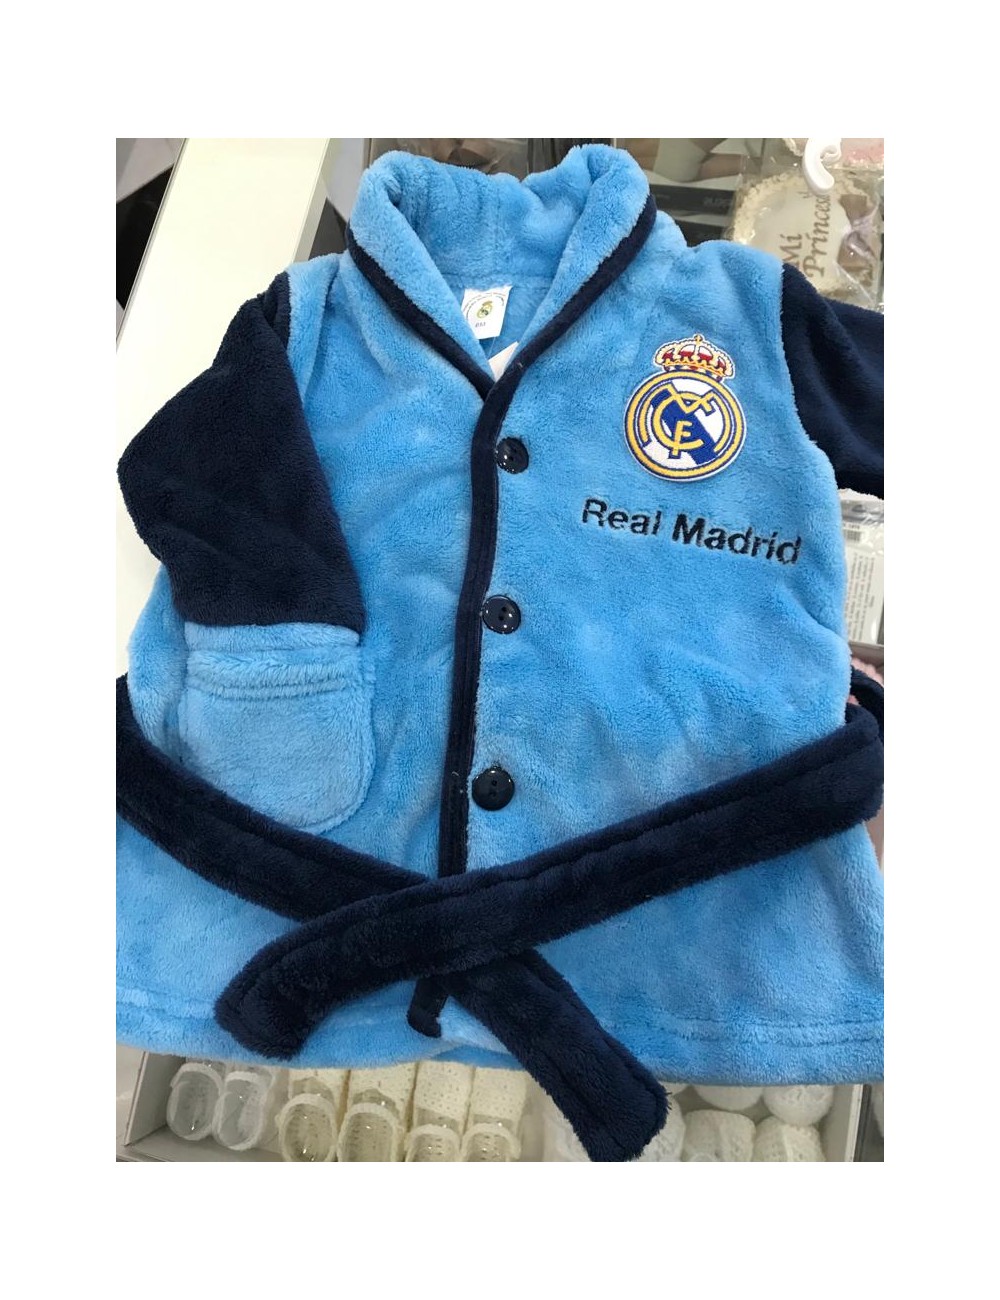 Pelele Real Madrid para bebé rosa producto oficial